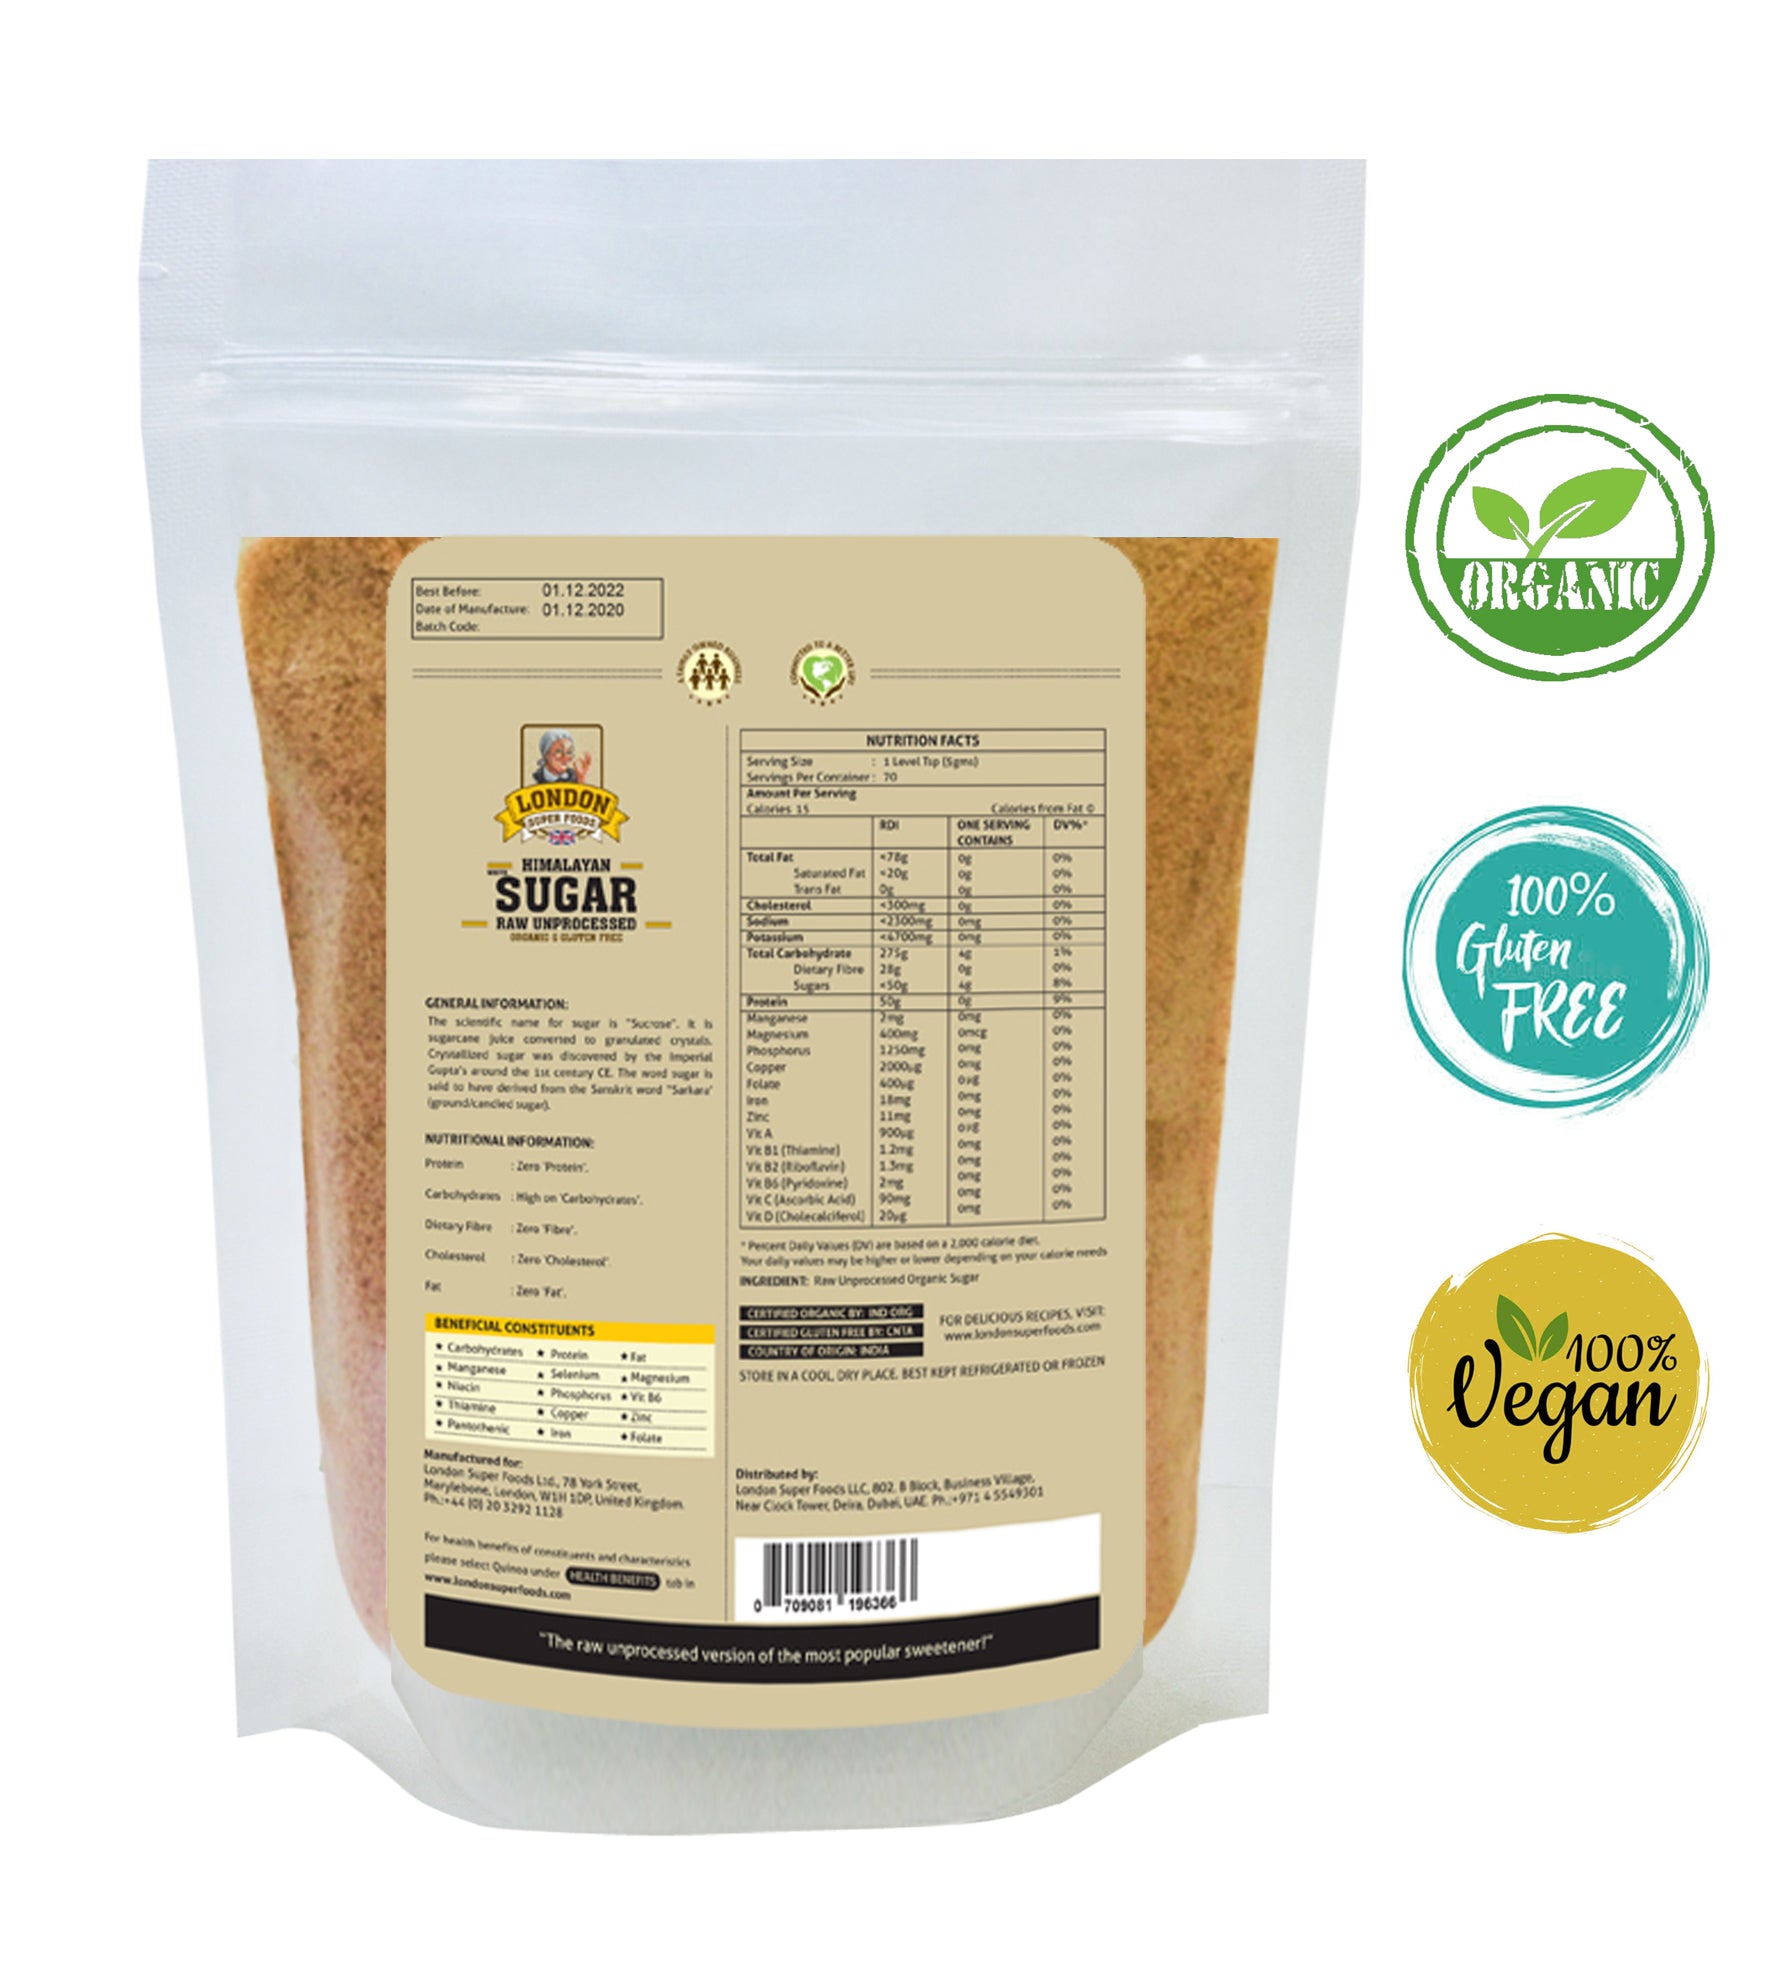 LONDON SUPER FOODS Organic Himalayan Sugar Raw Unprocessed, 350g